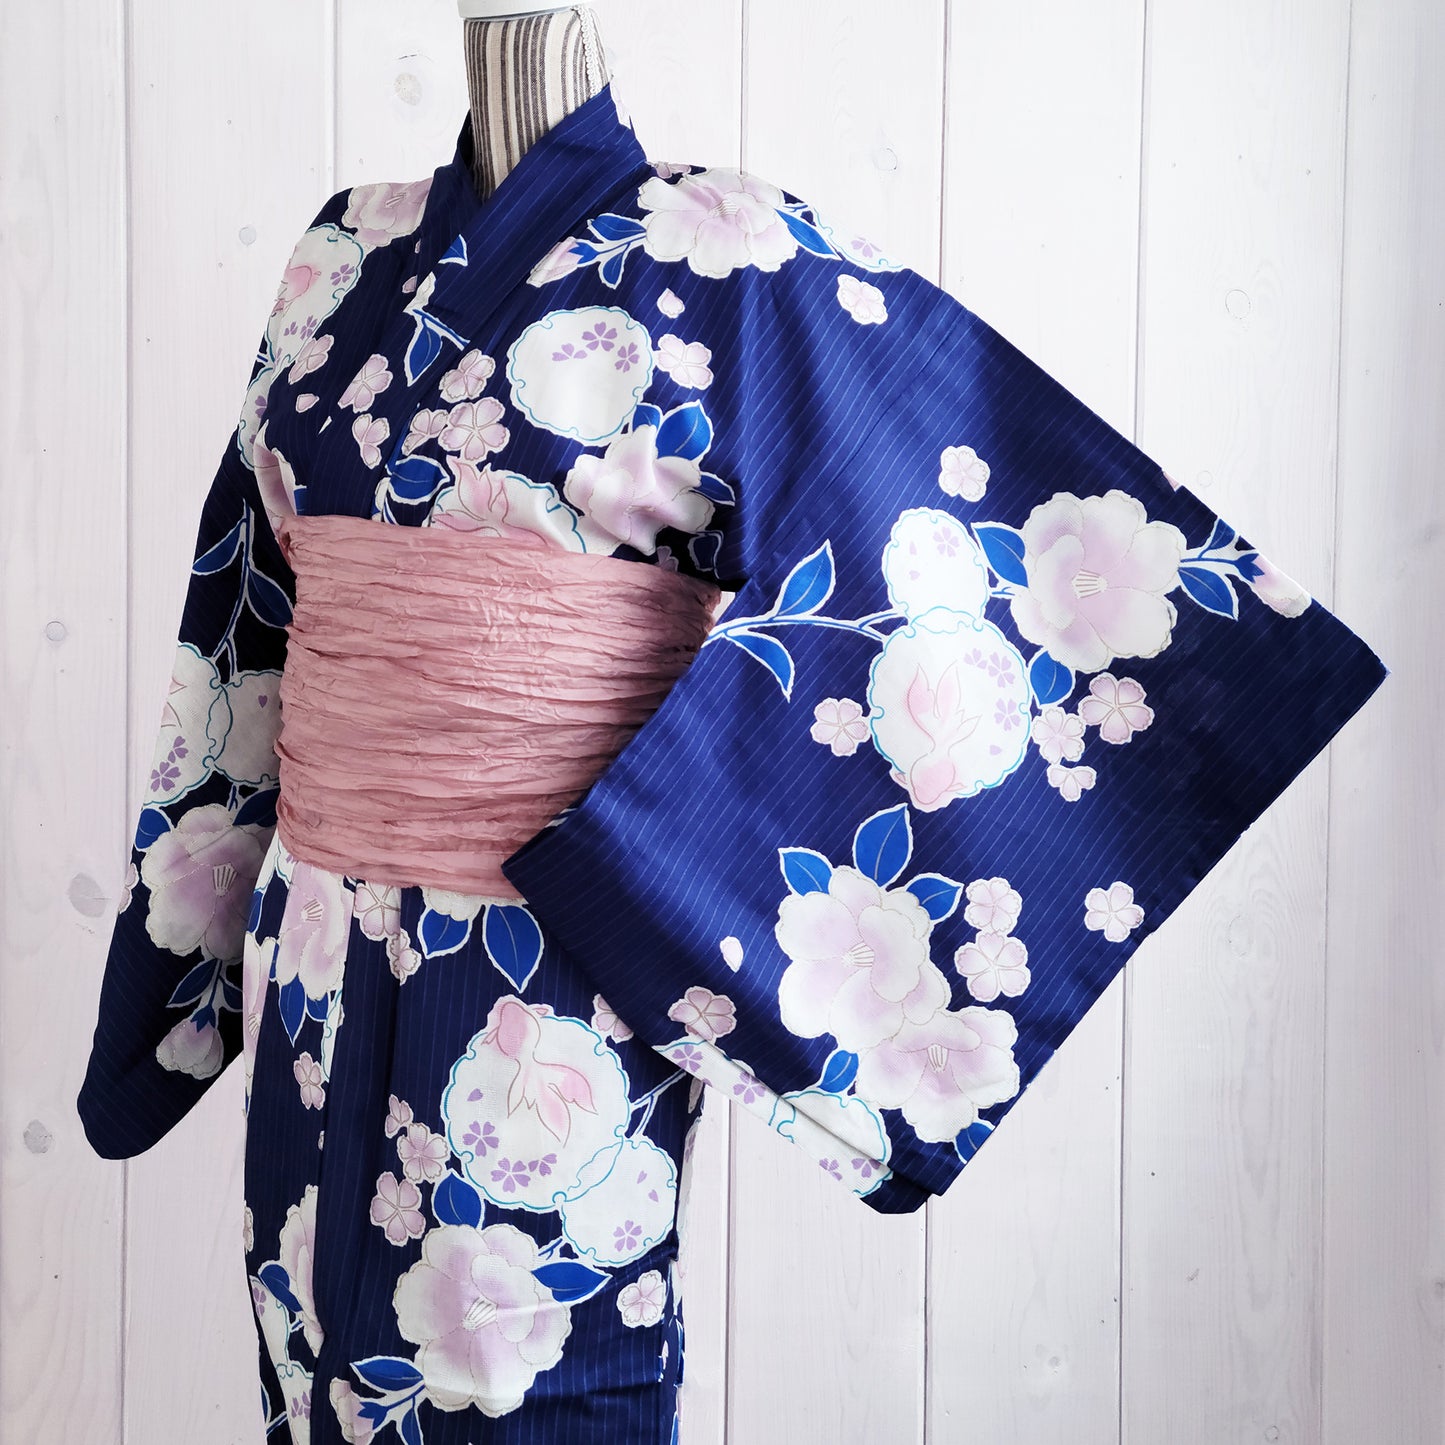 Women's Japanese Yukata Kimono - Pink Goldfish, Camellias, Cherry Blossoms in Blue